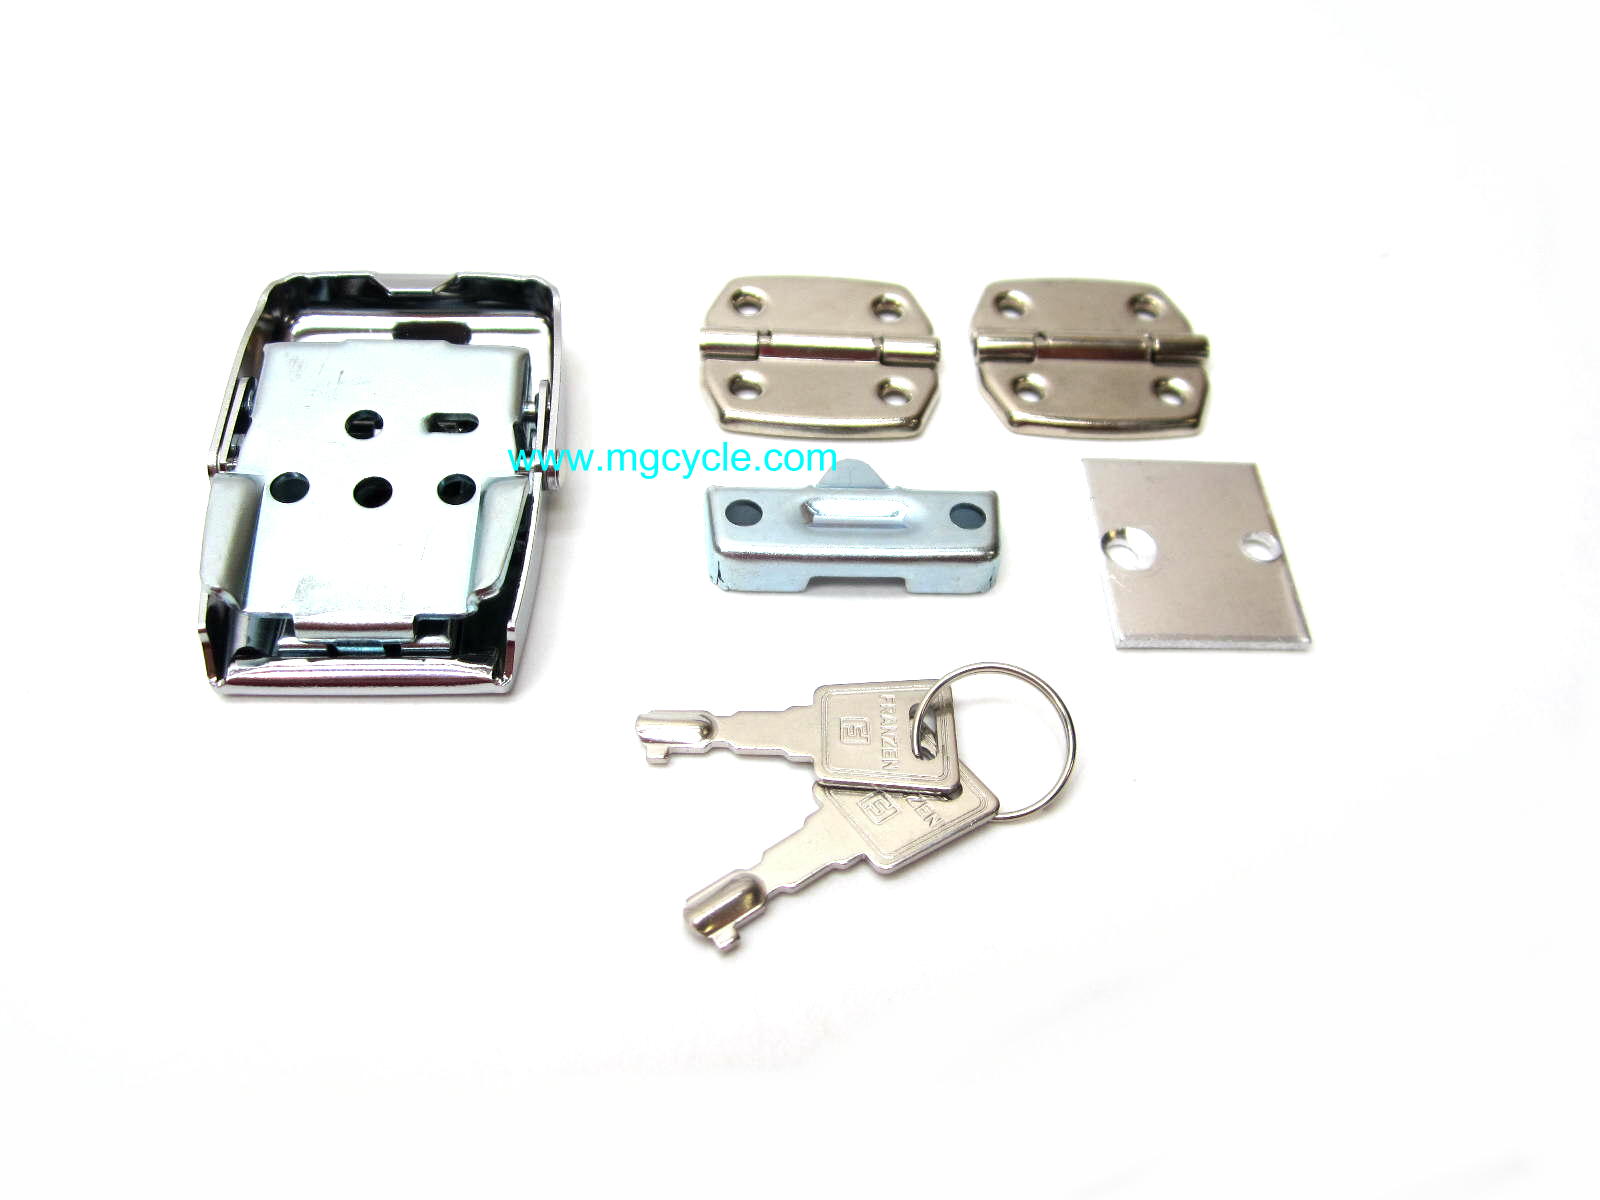 Hinge, latch and lock set for T3 Convert G5 saddlebag